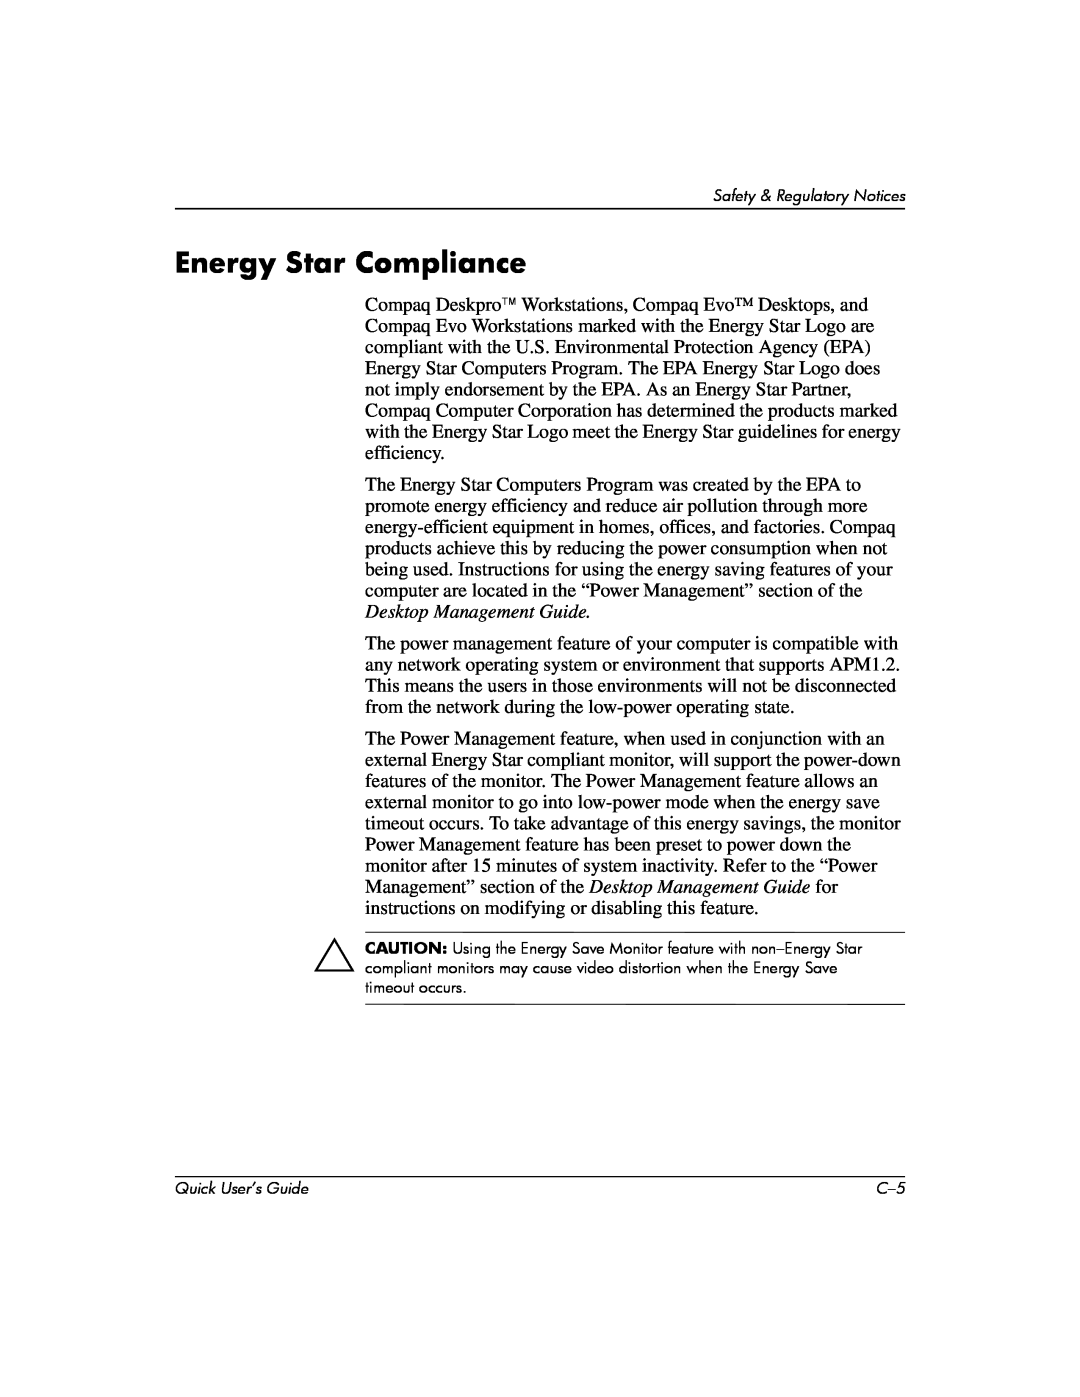 Compaq D510 e-pc manual Energy Star Compliance 